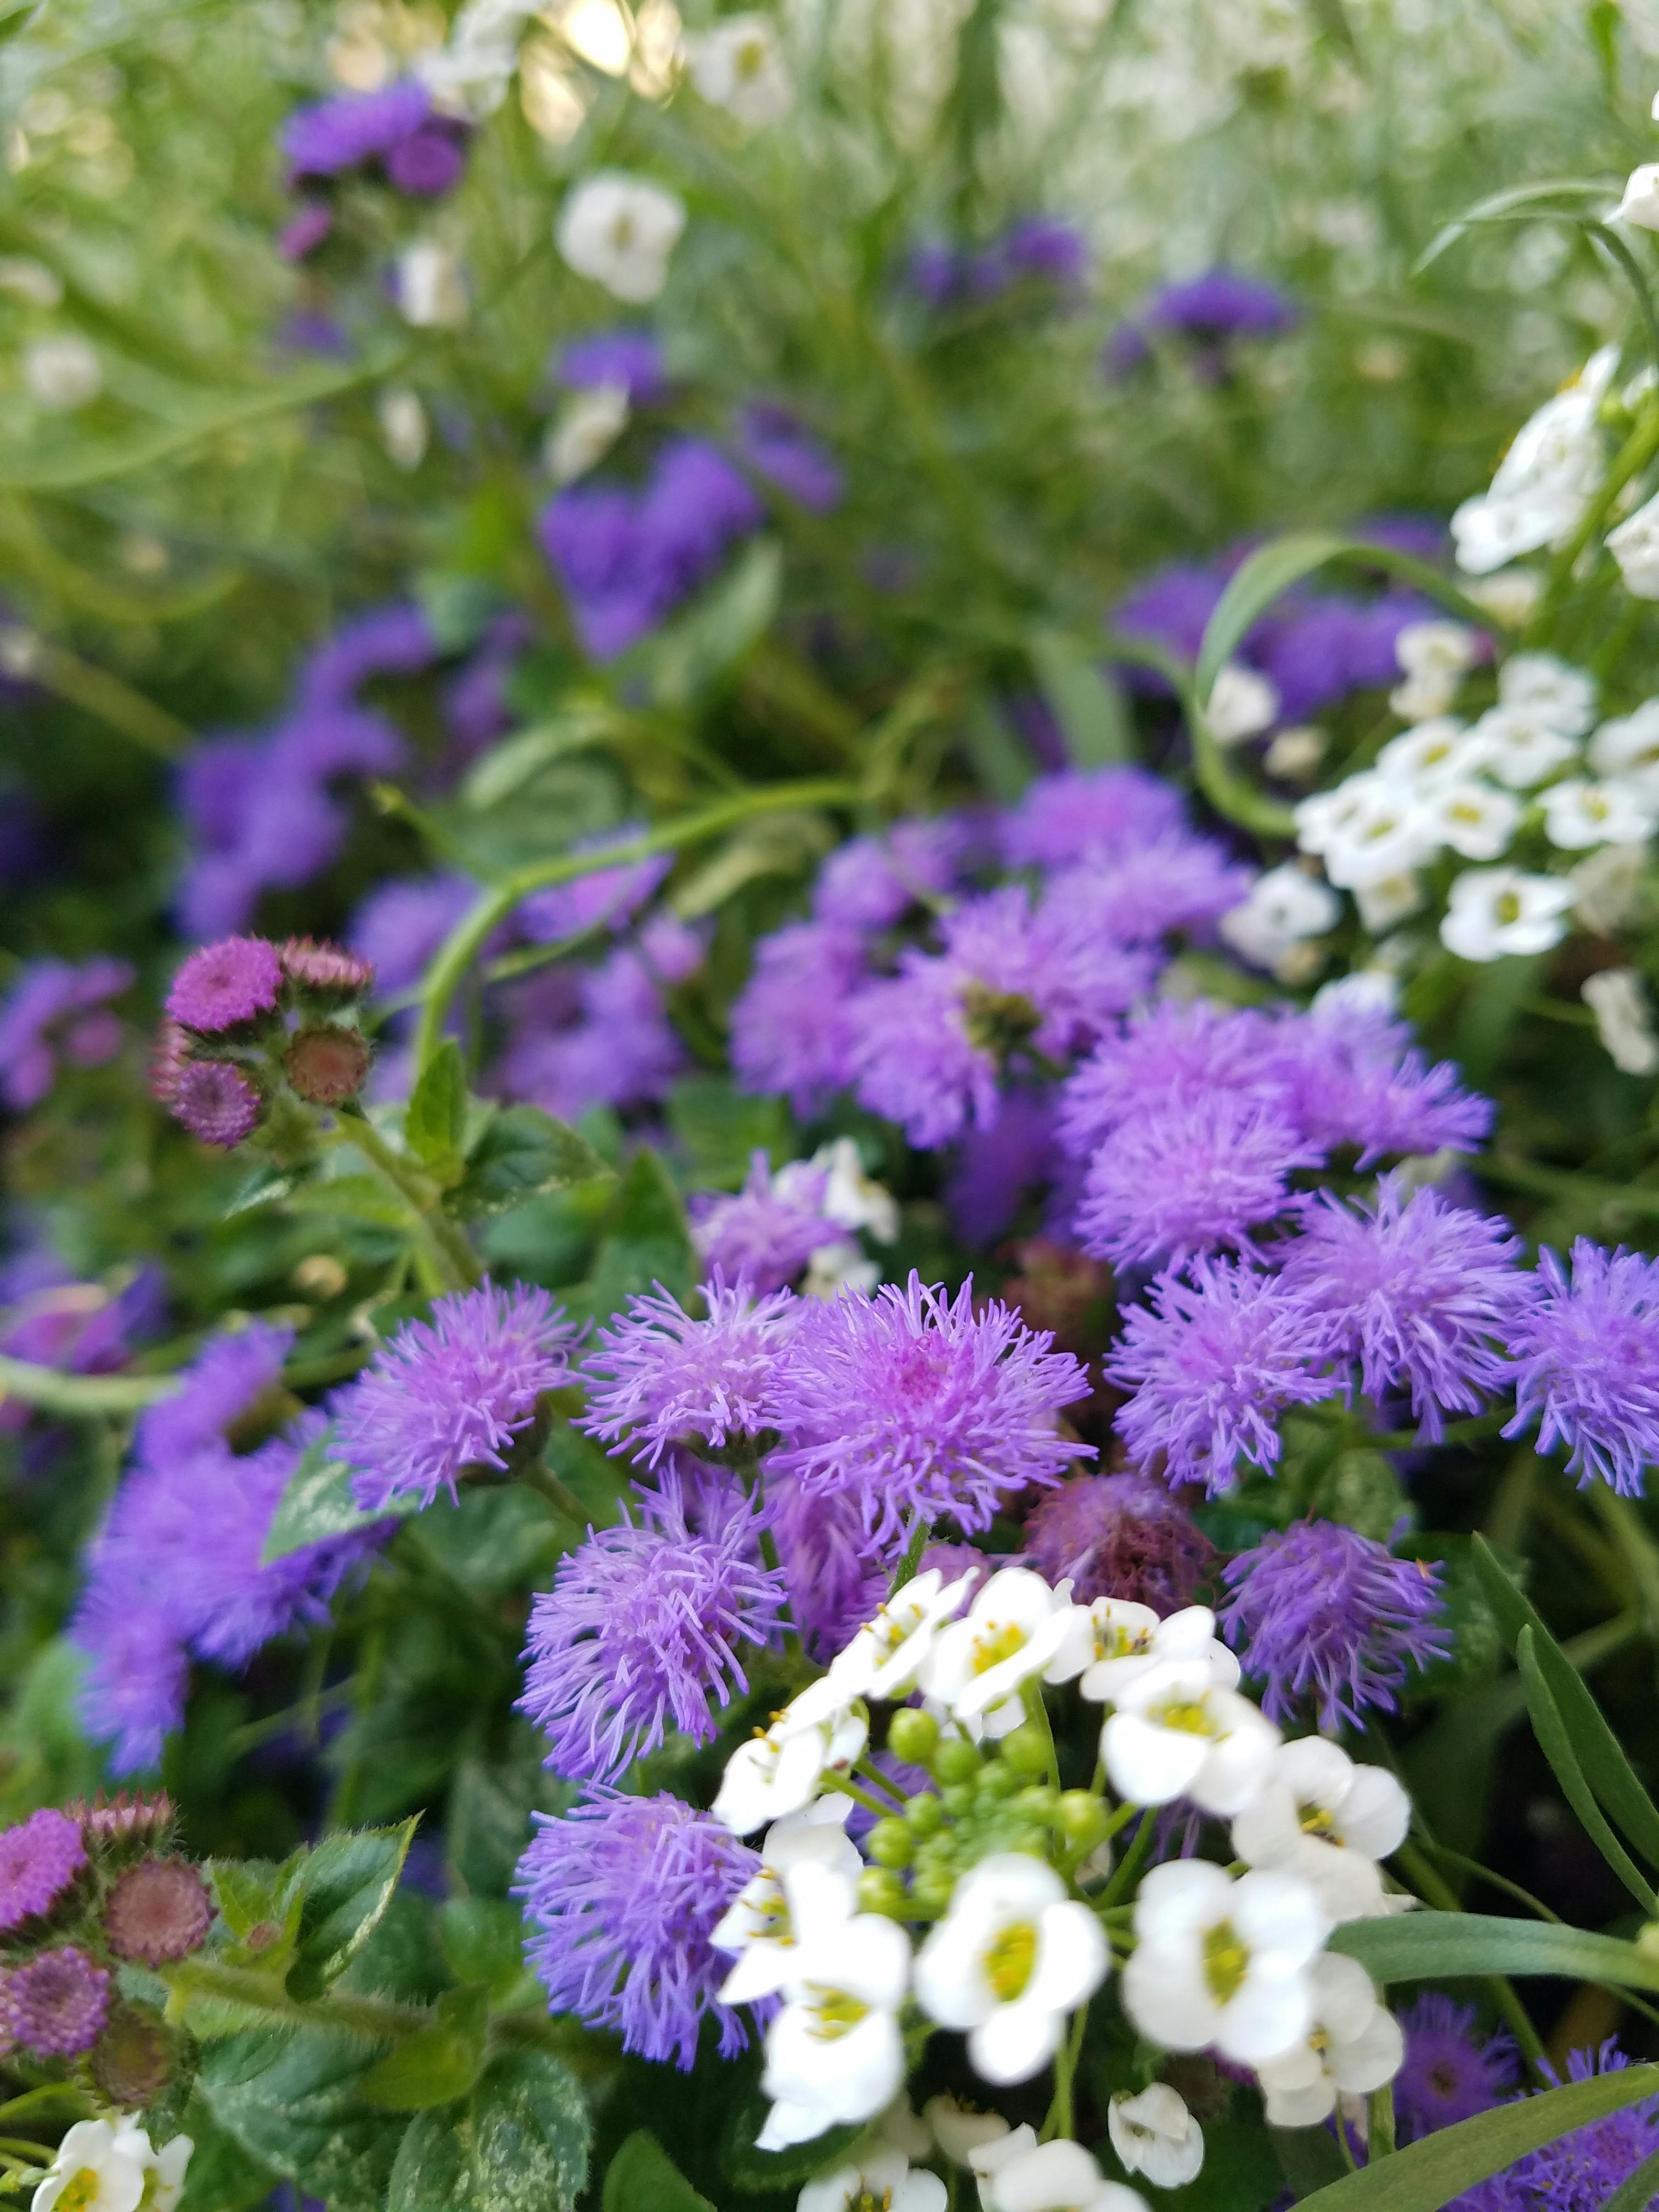 Free stock photo of flowers, purple flowers, small flowers